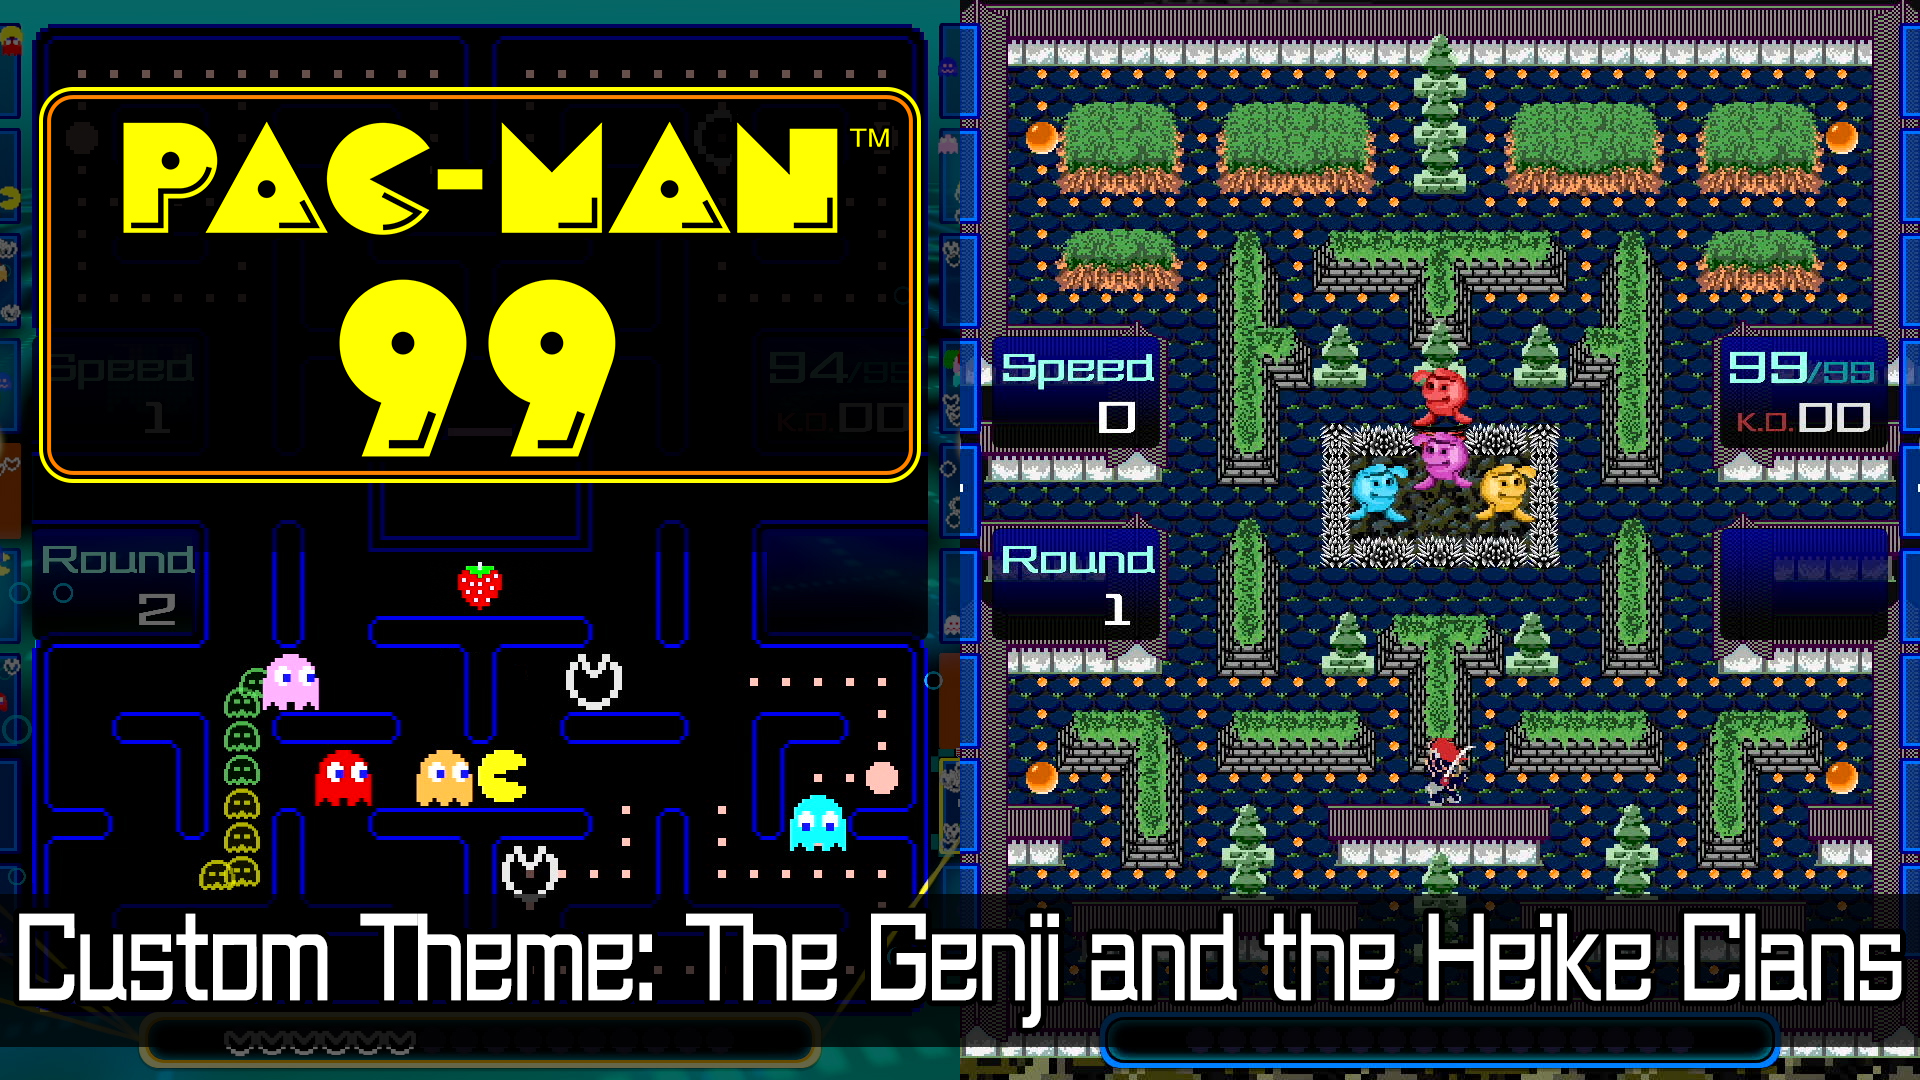 PAC-MAN 99 Custom Theme: The Genji and the Heike Clans